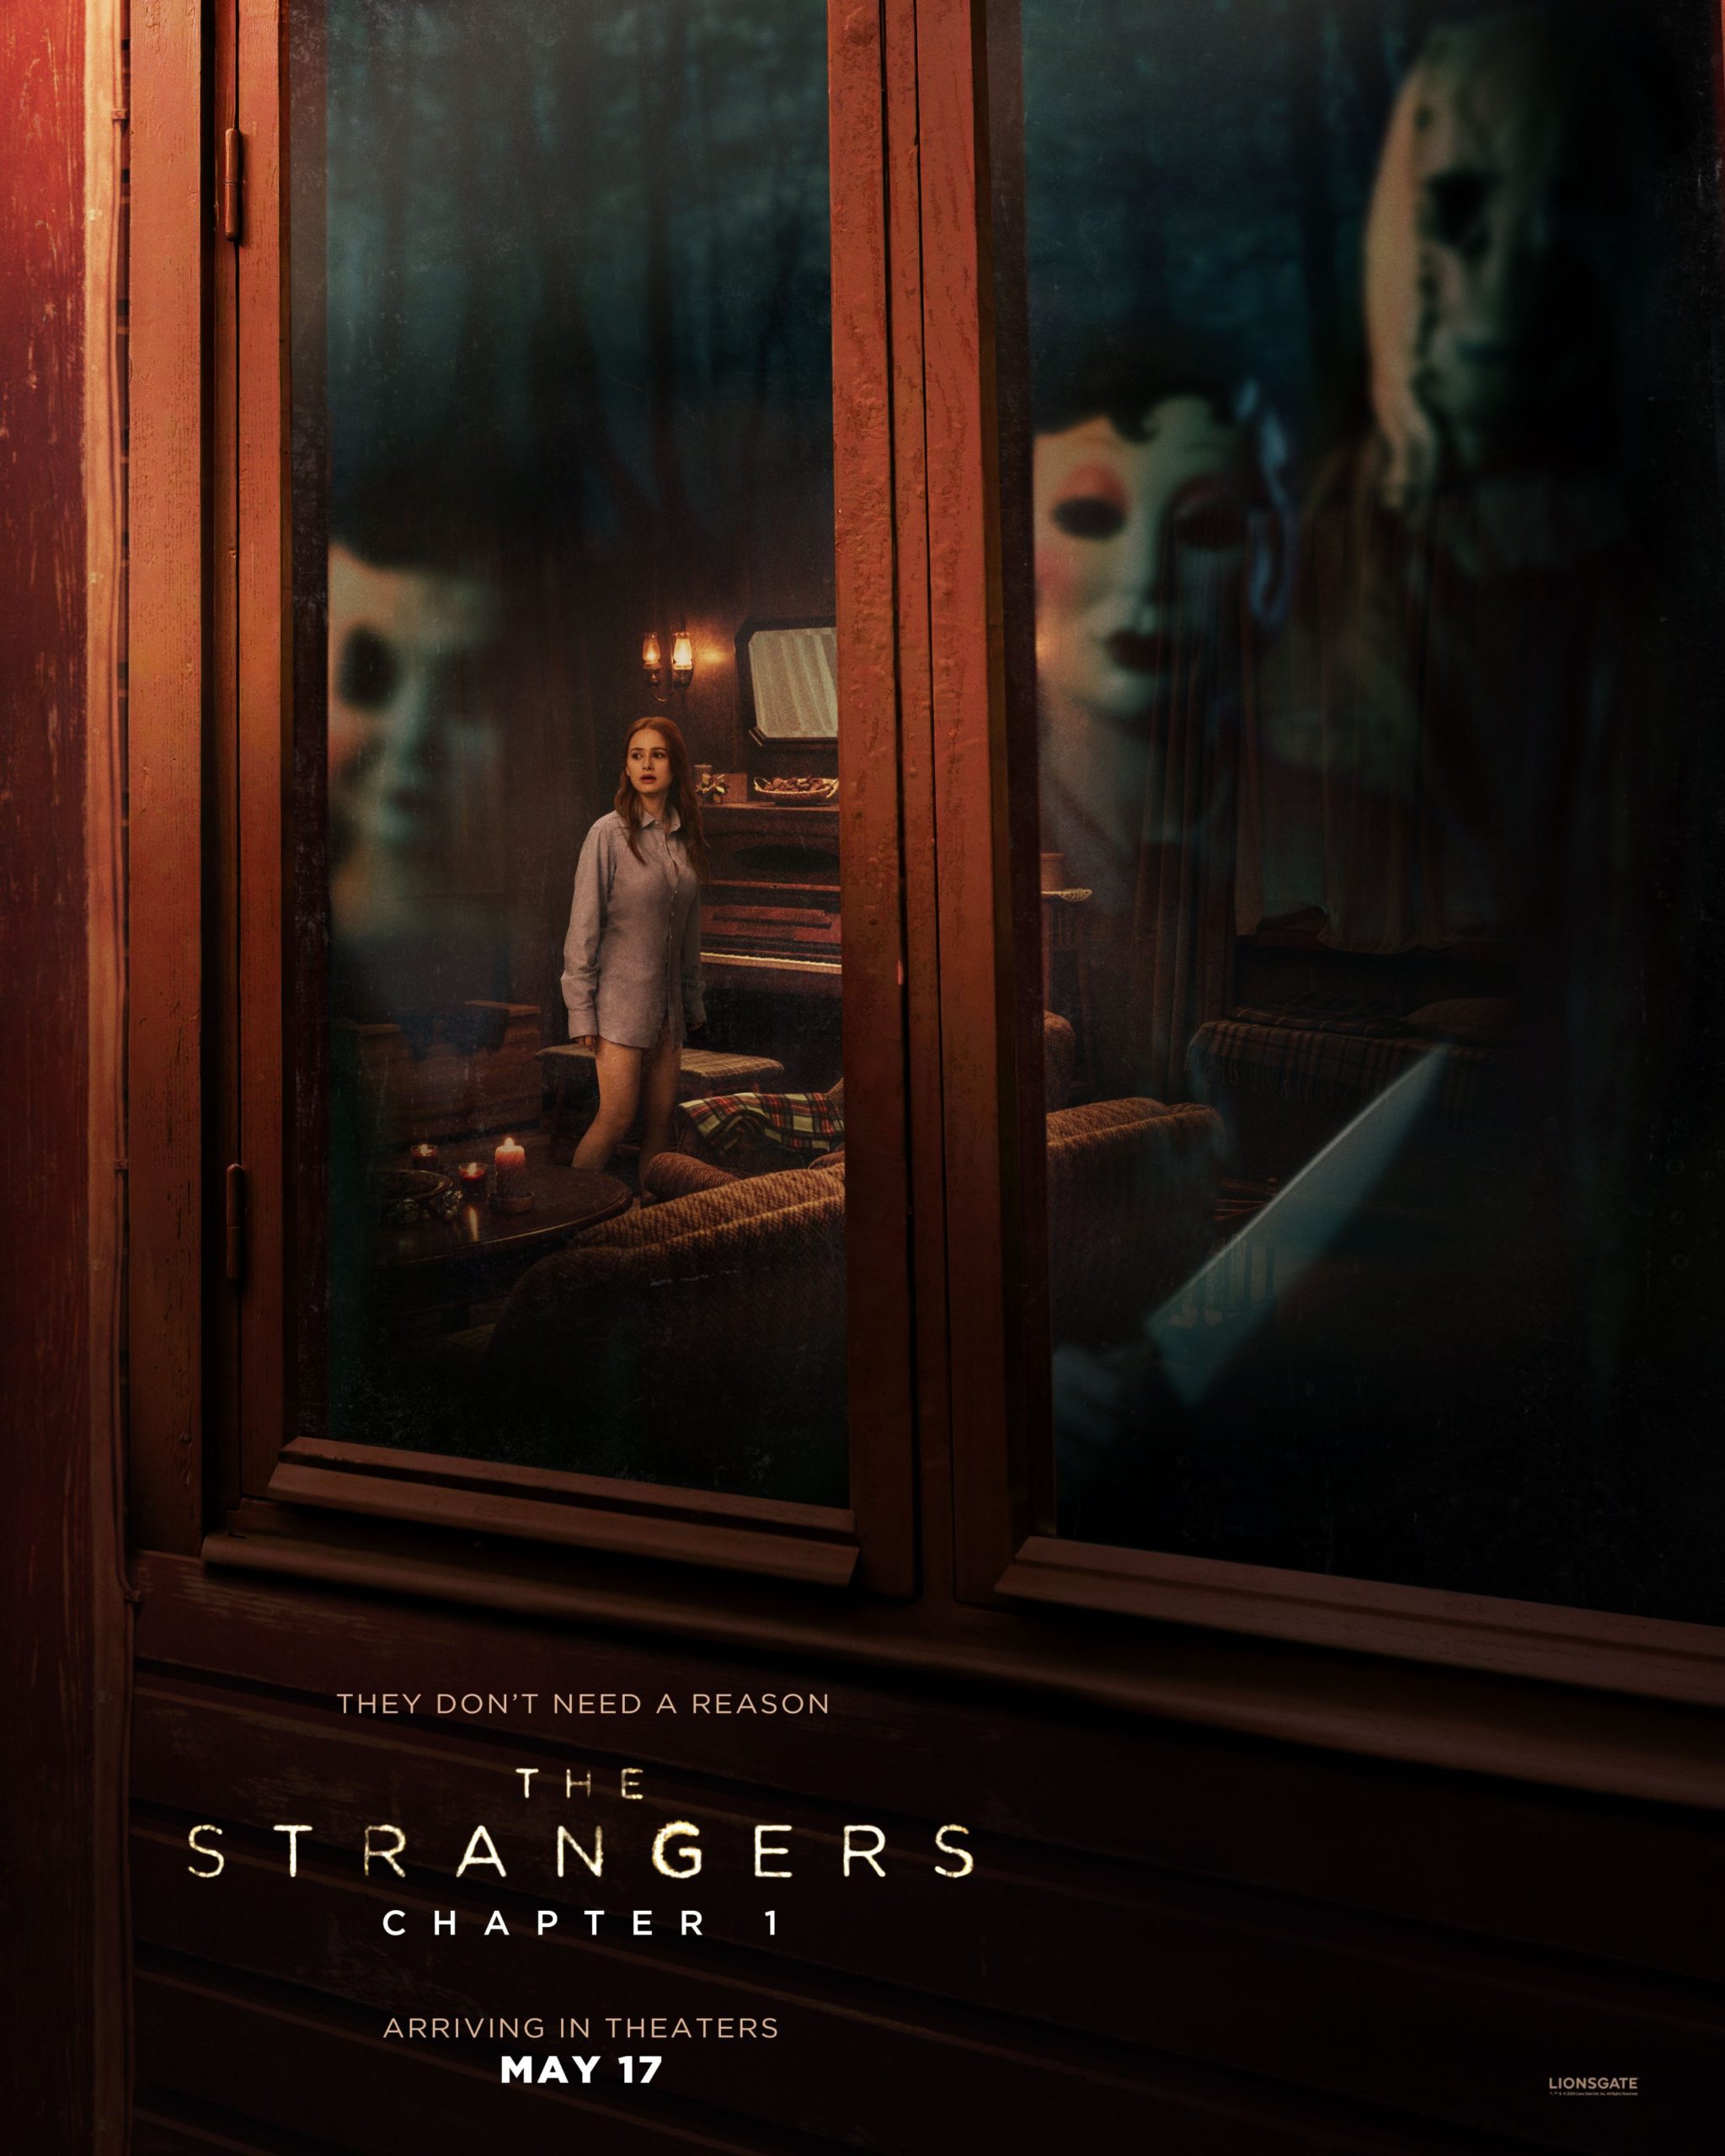 The Strangers Chapter 1 trailer poster